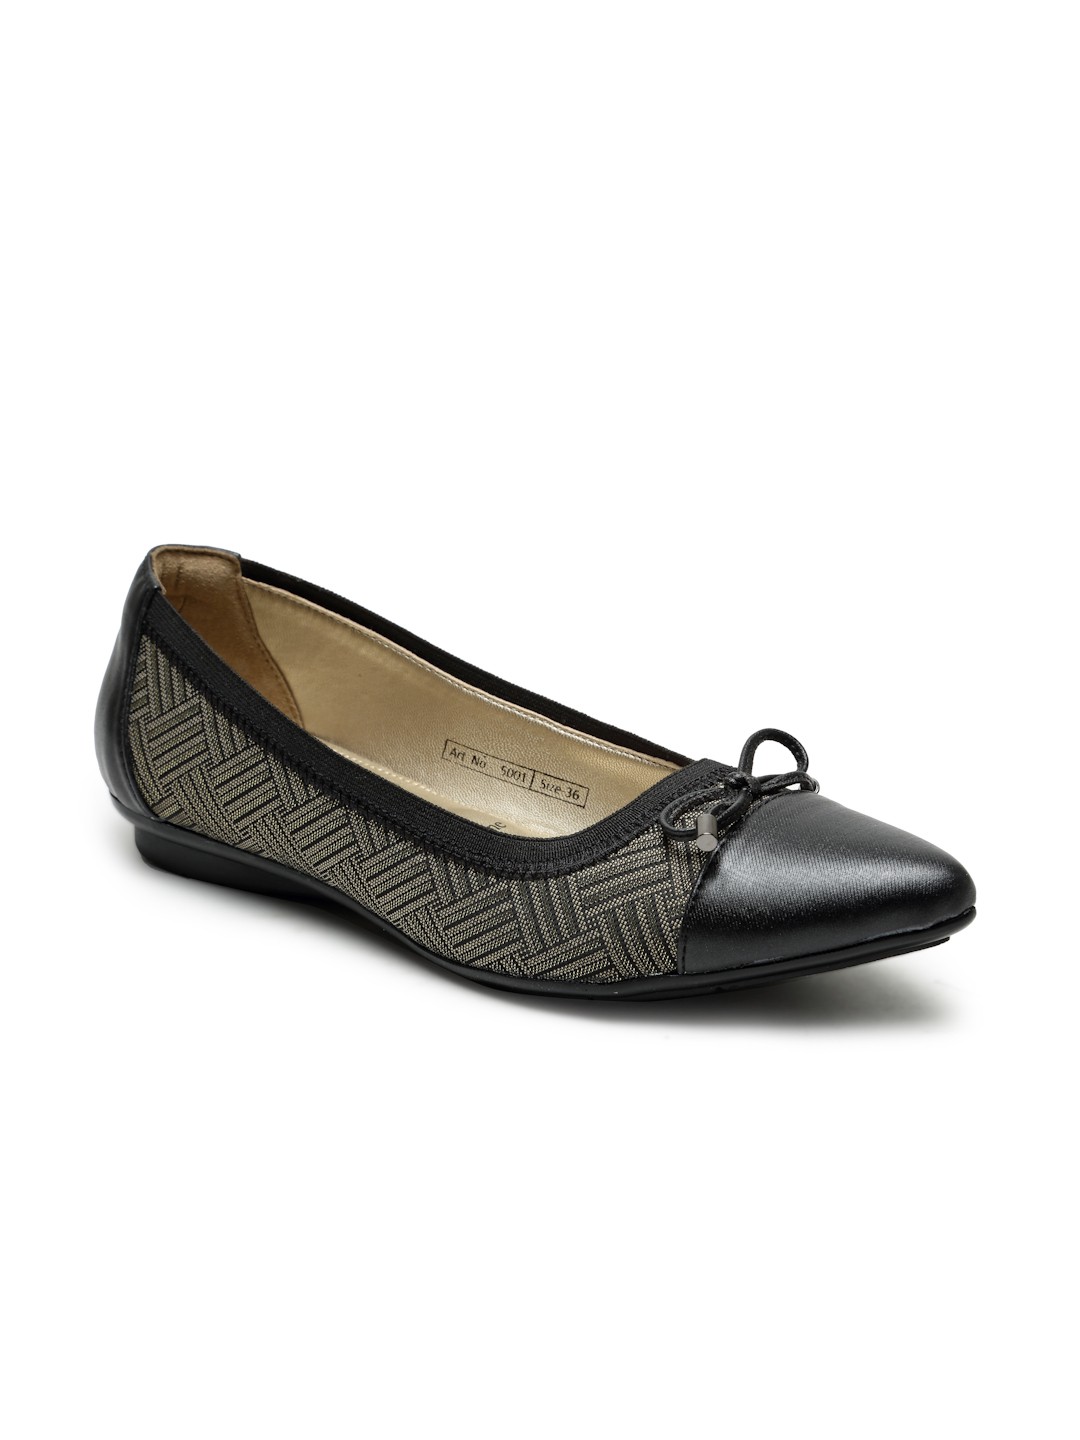 Buy Von Wellx Germany Comfort Women's Black Casual Shoes Lisa Online in Tiruchirappalli